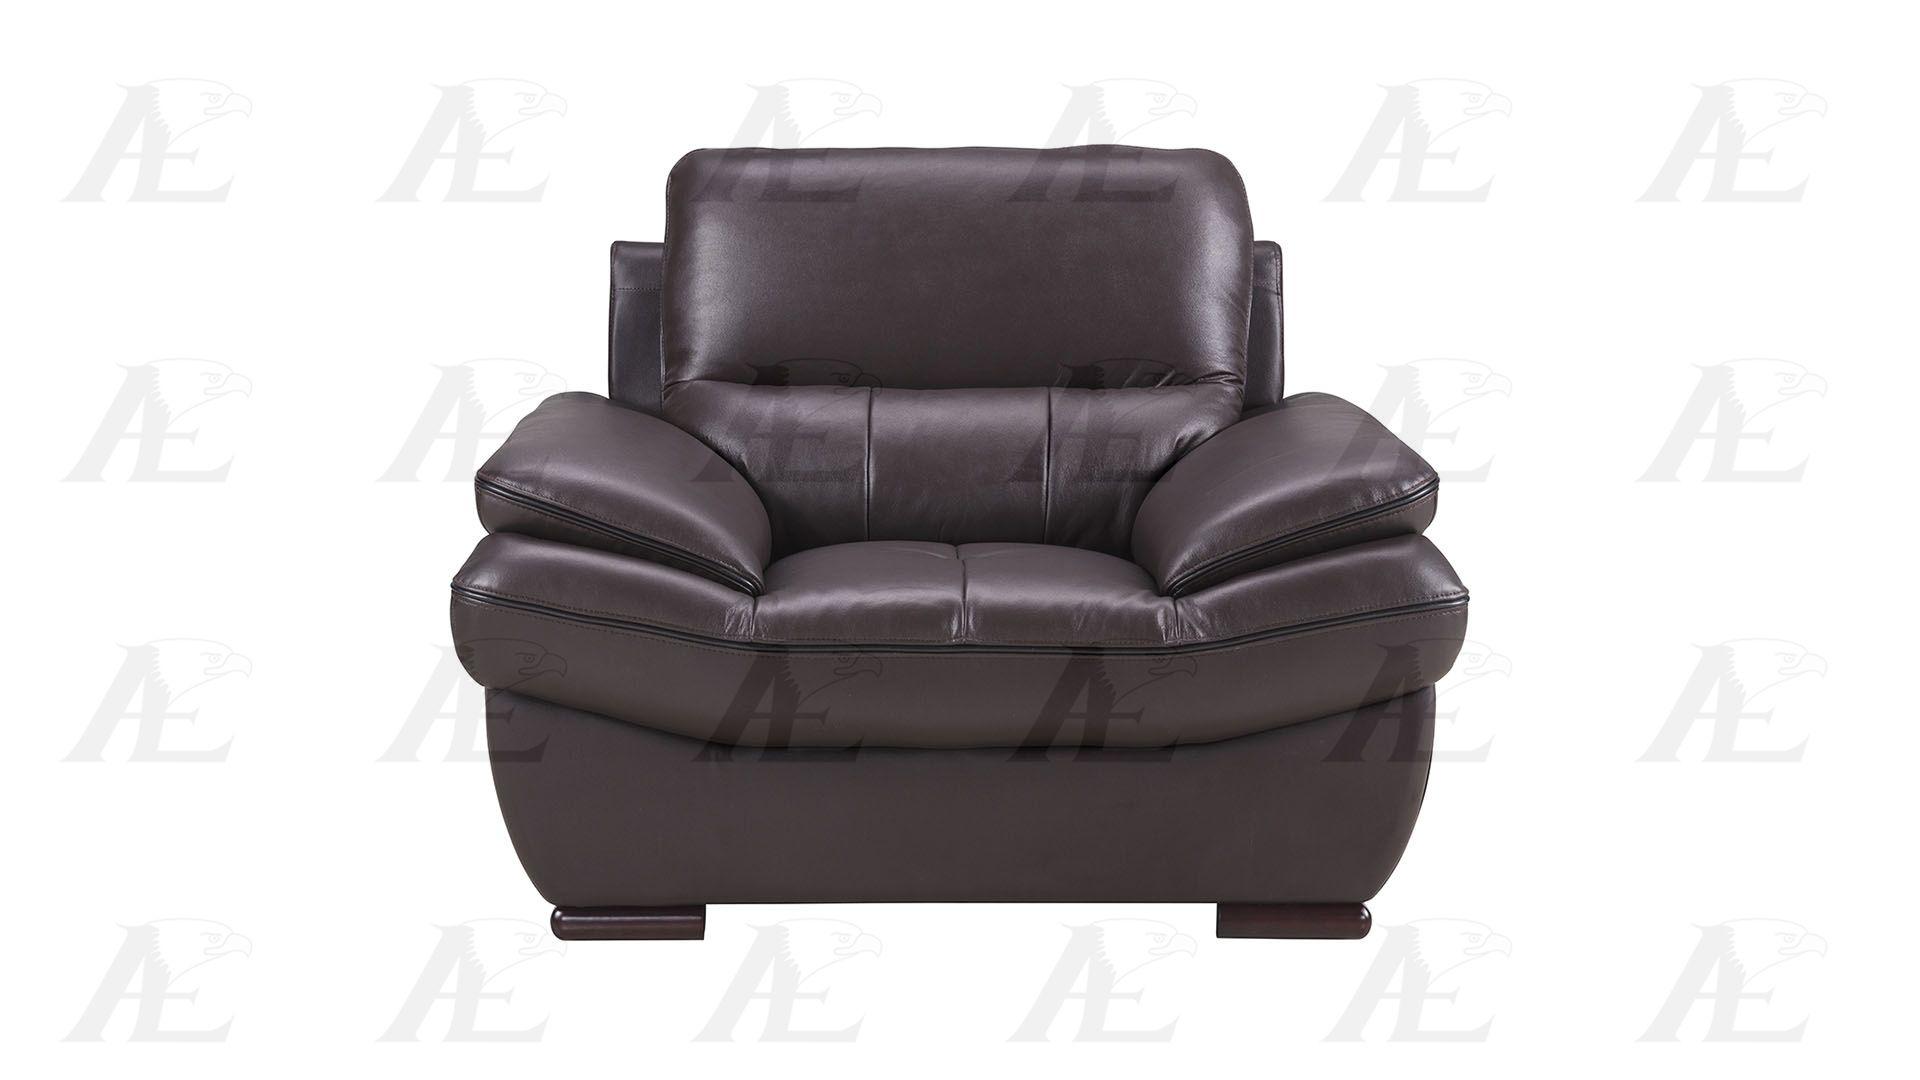 

    
EK-B305-DC-SET-3 American Eagle Furniture Sofa Set
